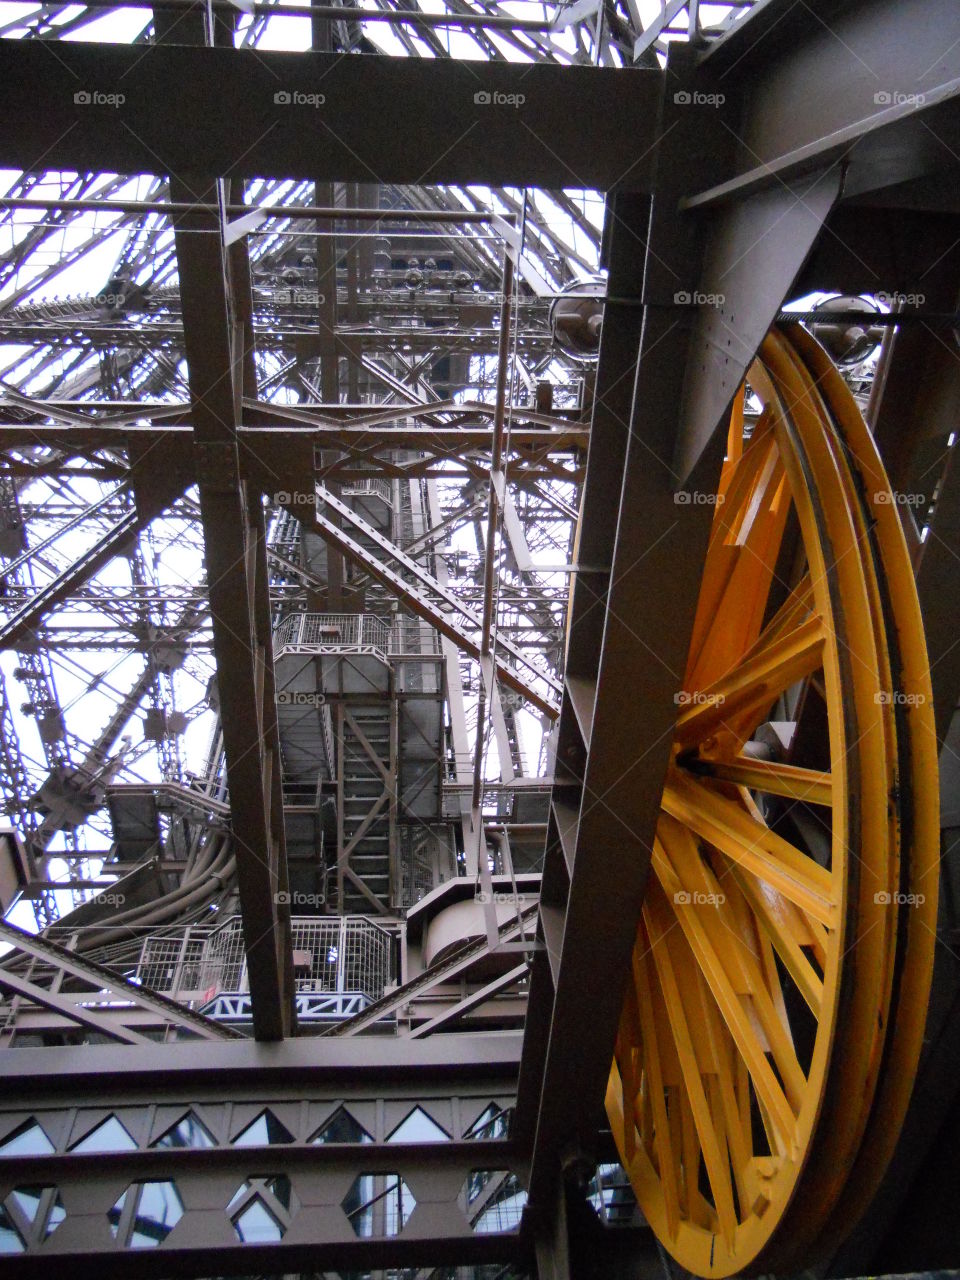 Inside the Eiffel tower